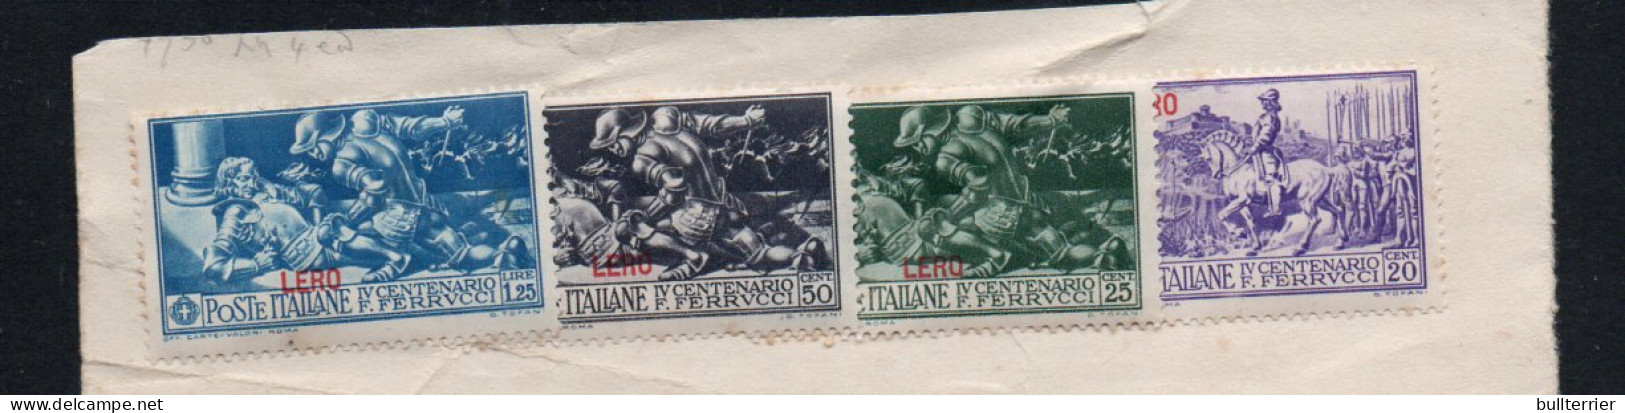 AEGEAN ISLANDS  /  LERO   -1930 FERRUCCI 20C. 25C  50C AND 1L25 MINT HINGED  SG CAT £23 - Egée (Nisiro)